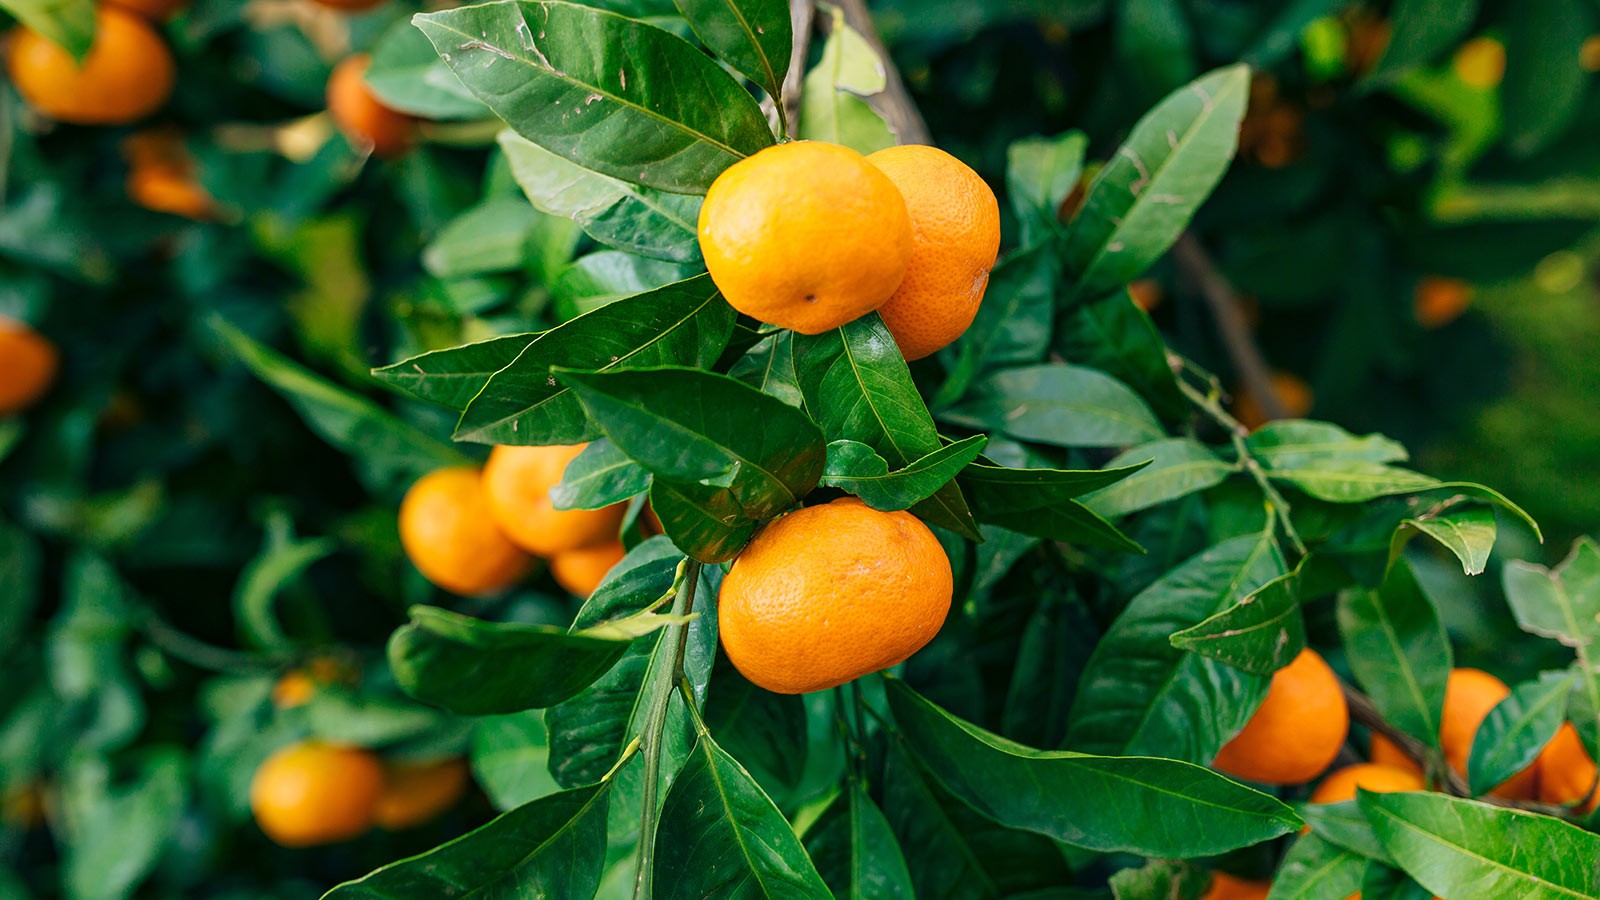 Obiranje mandarin v dolini reke Neretve